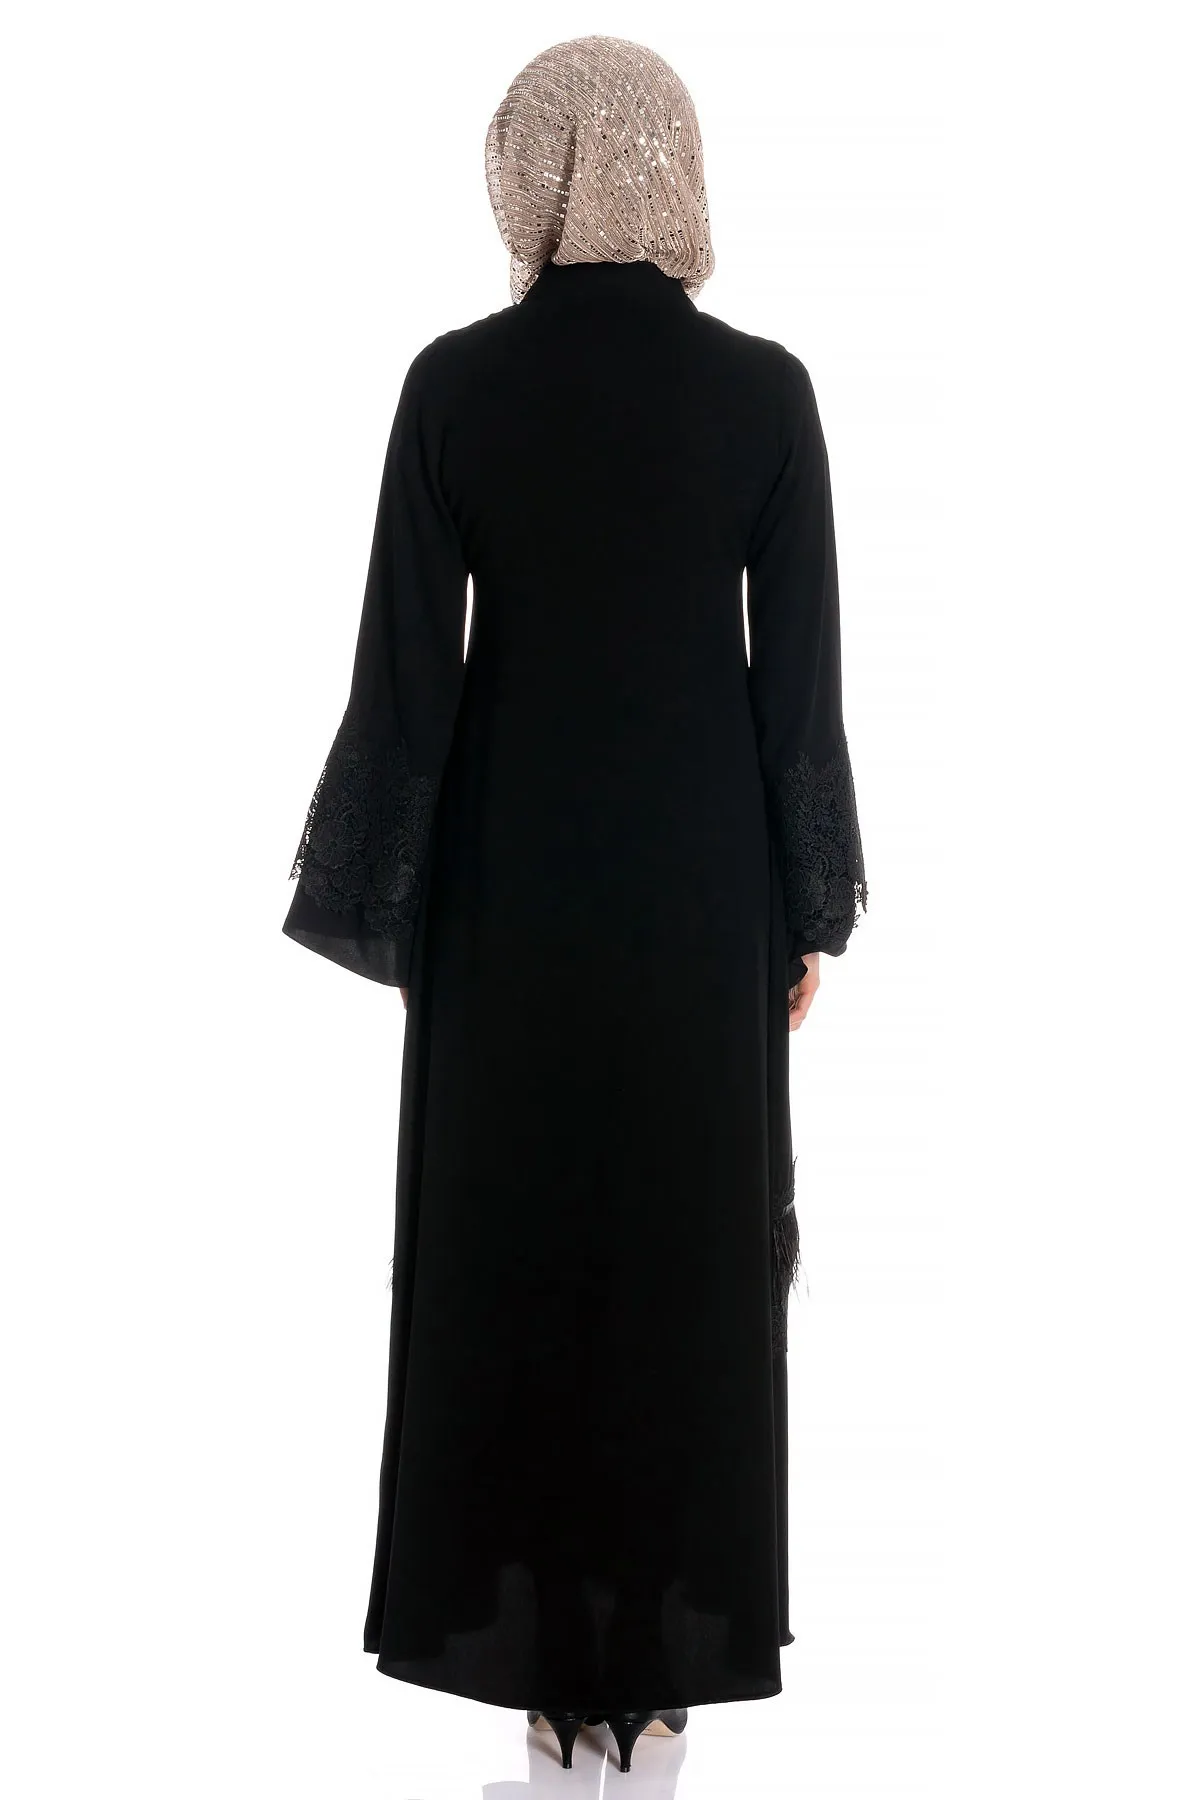 Snaps Black Abaya Ferace Abaya Kimono, Dubaija turcija Kaftan musulmaņu jaciņa Abayas kleitas gadījuma sieviešu Drēbes Femme Aproces